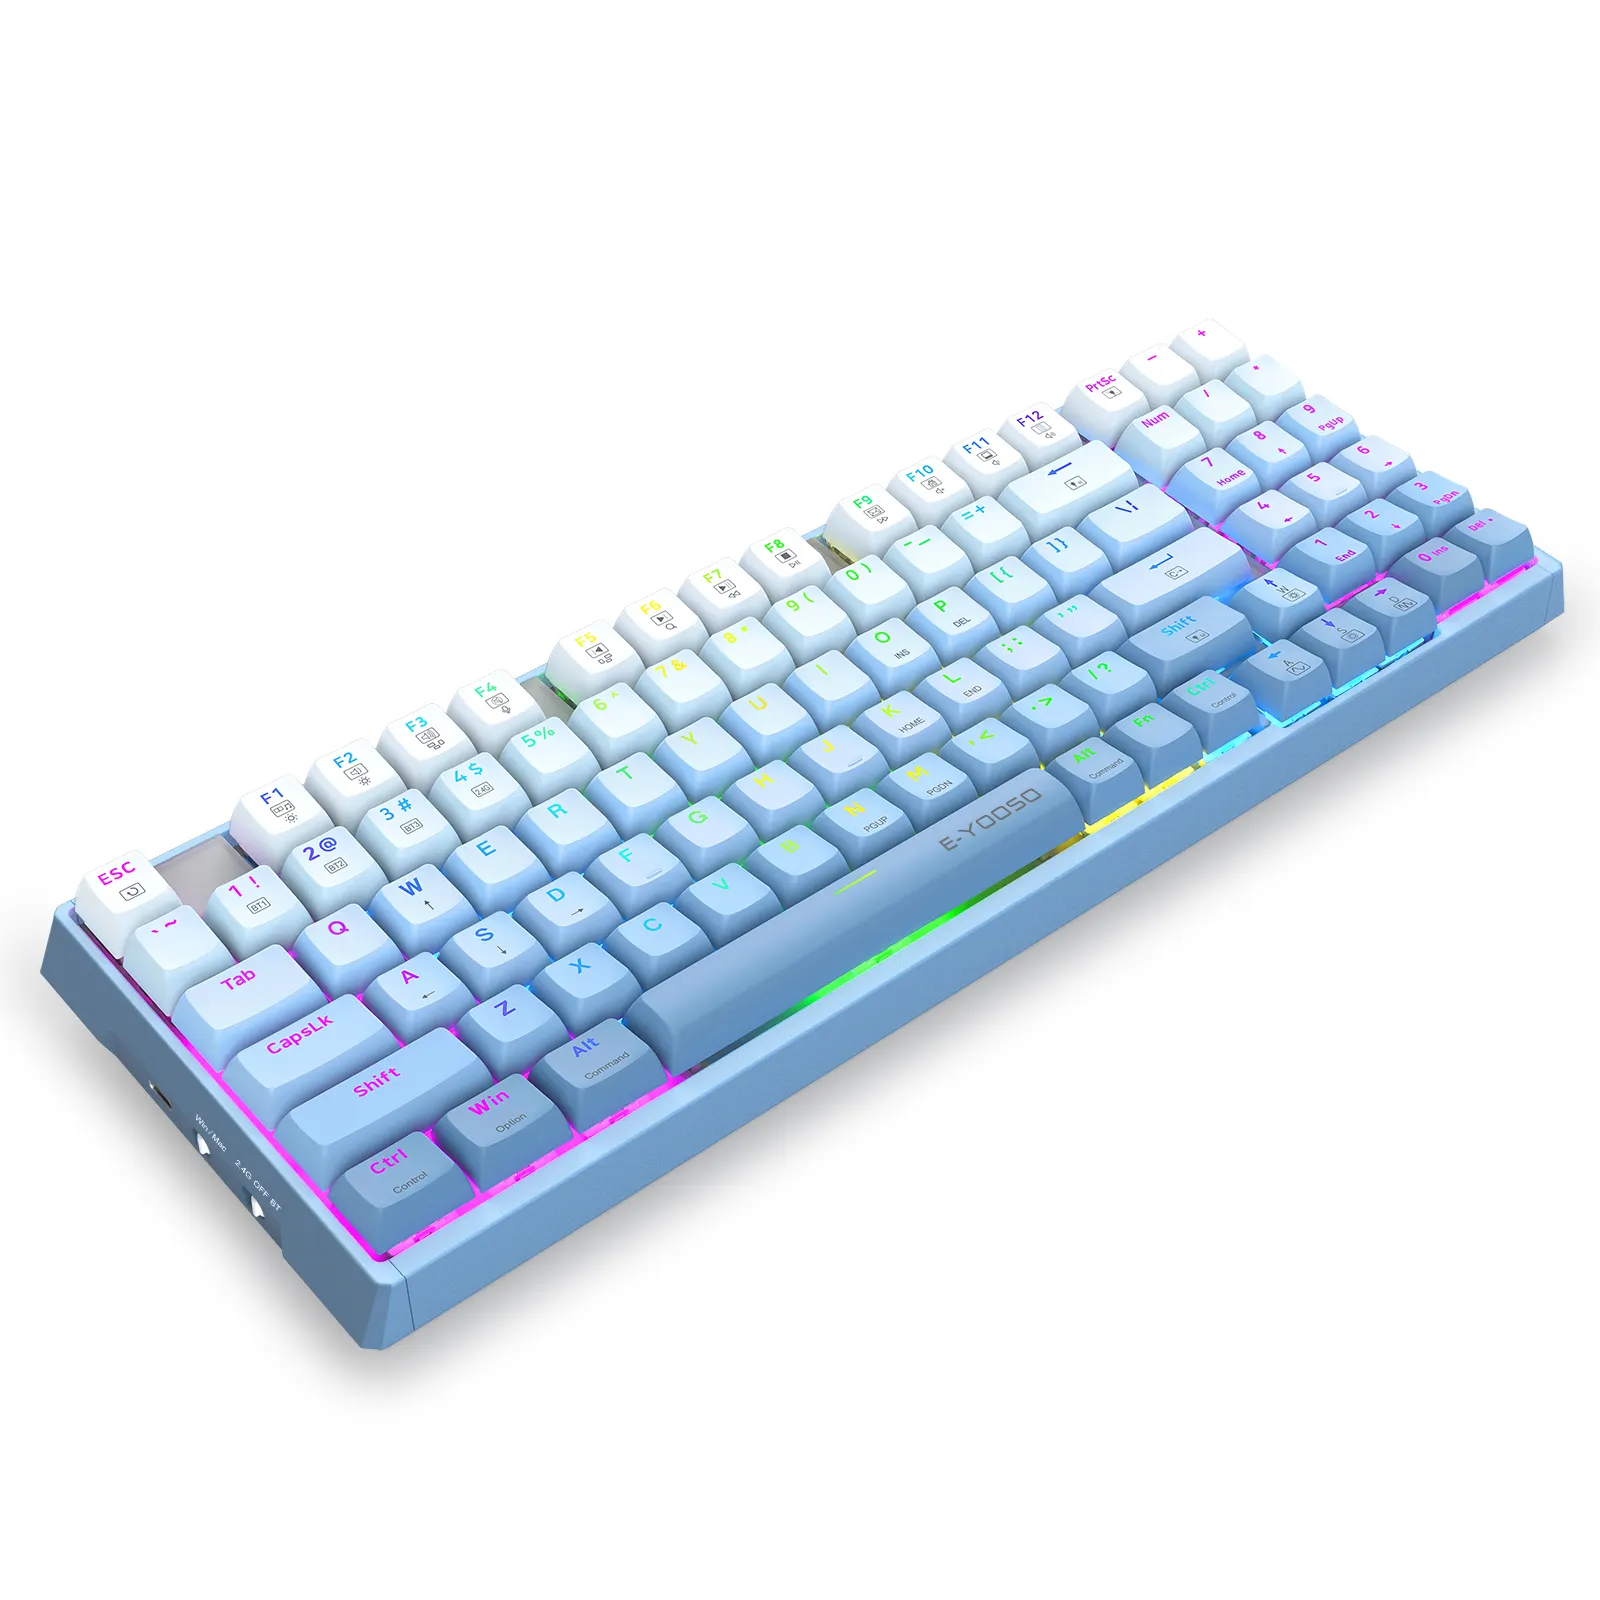 Gaming Keyboard With RGB Backlight2.4g Wireless Keyboard Ergonomic Design Responsive Keyboard